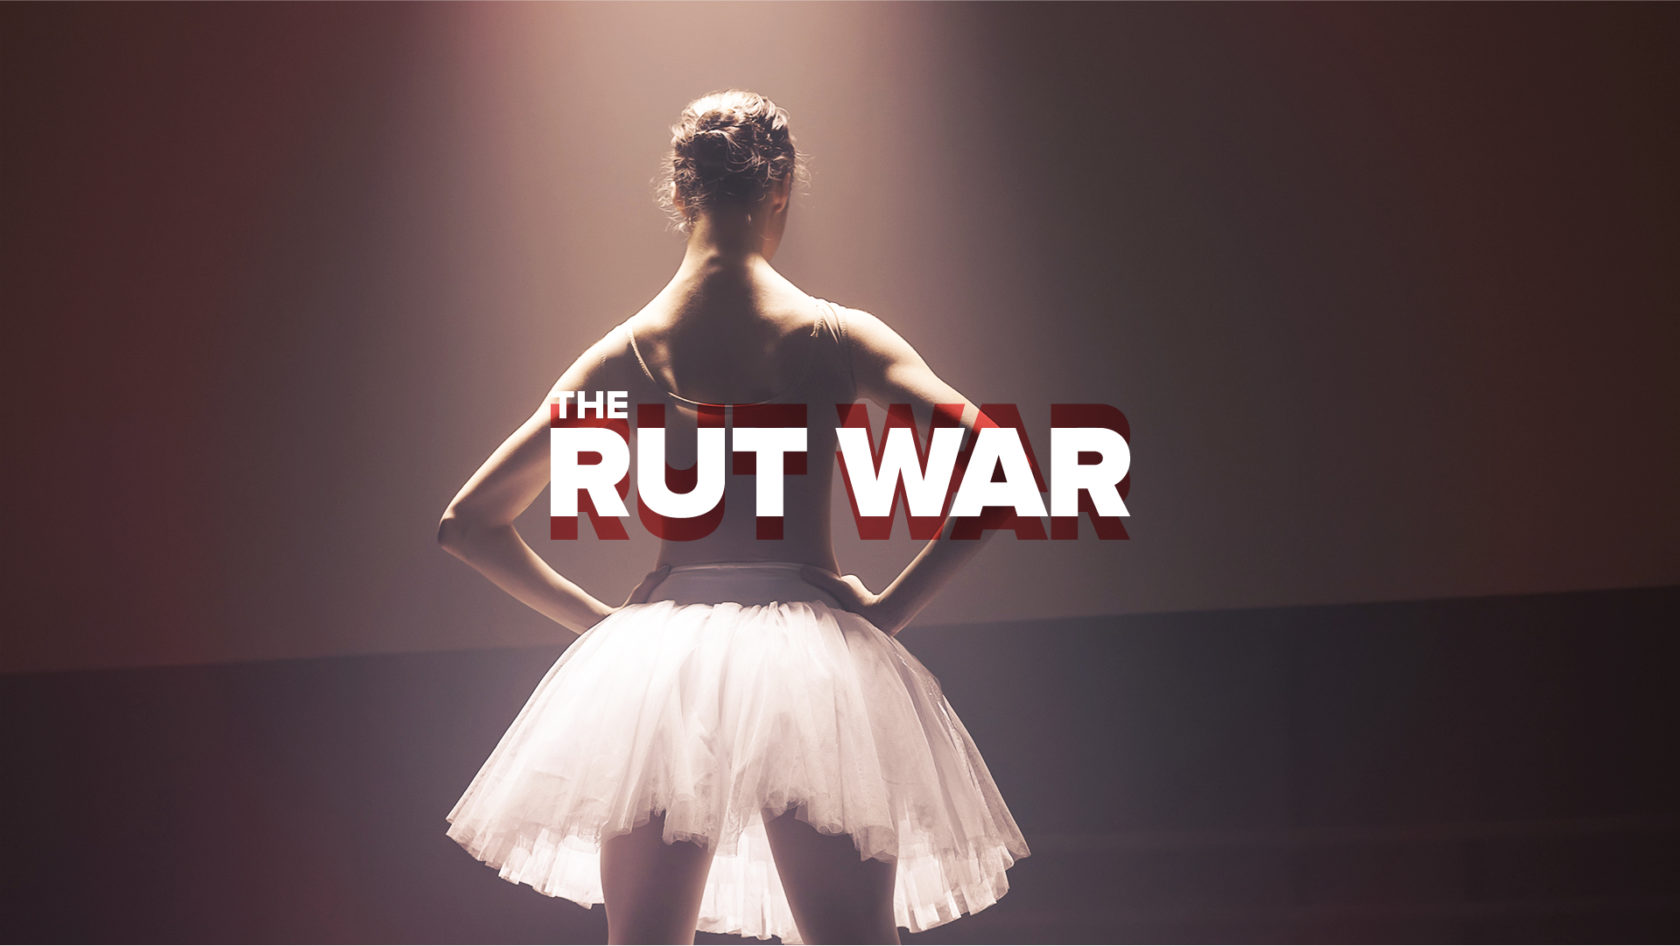 The Rut War